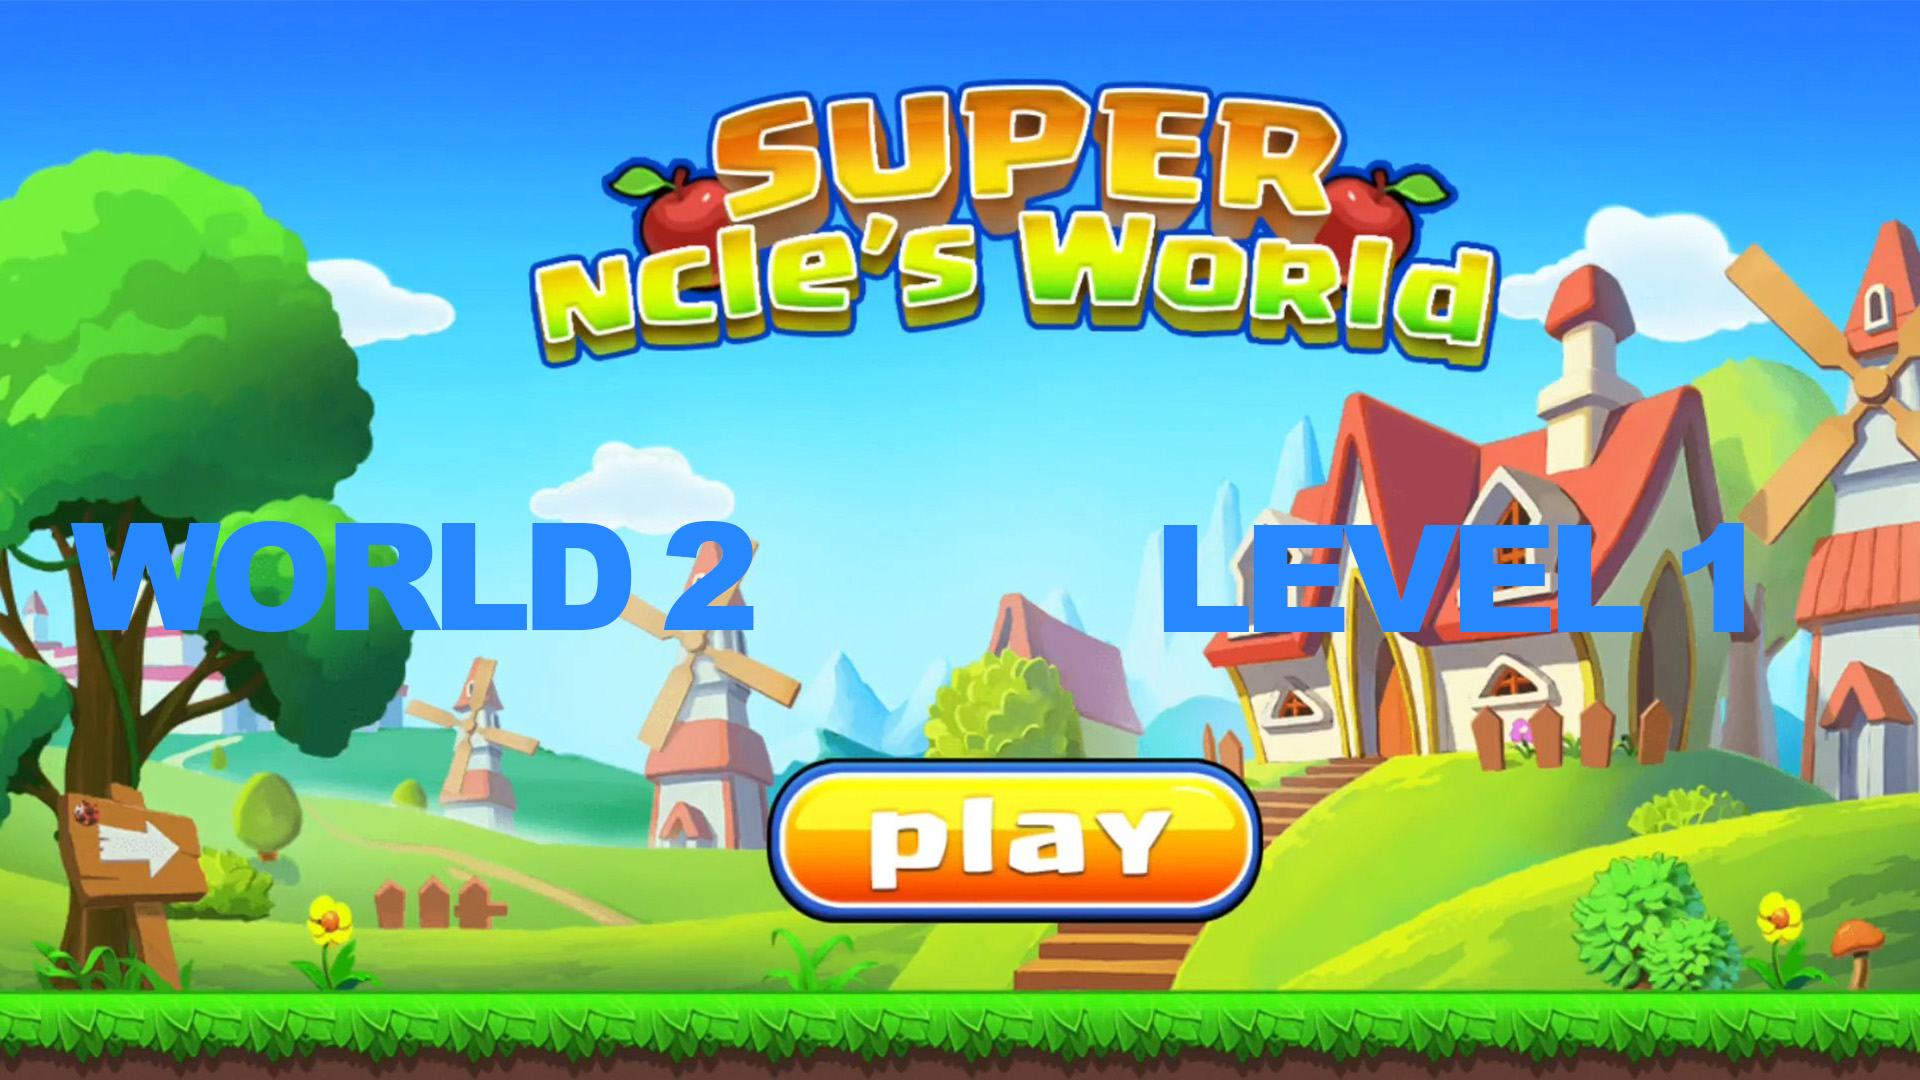 Super ncle's  World 2. levei 1.